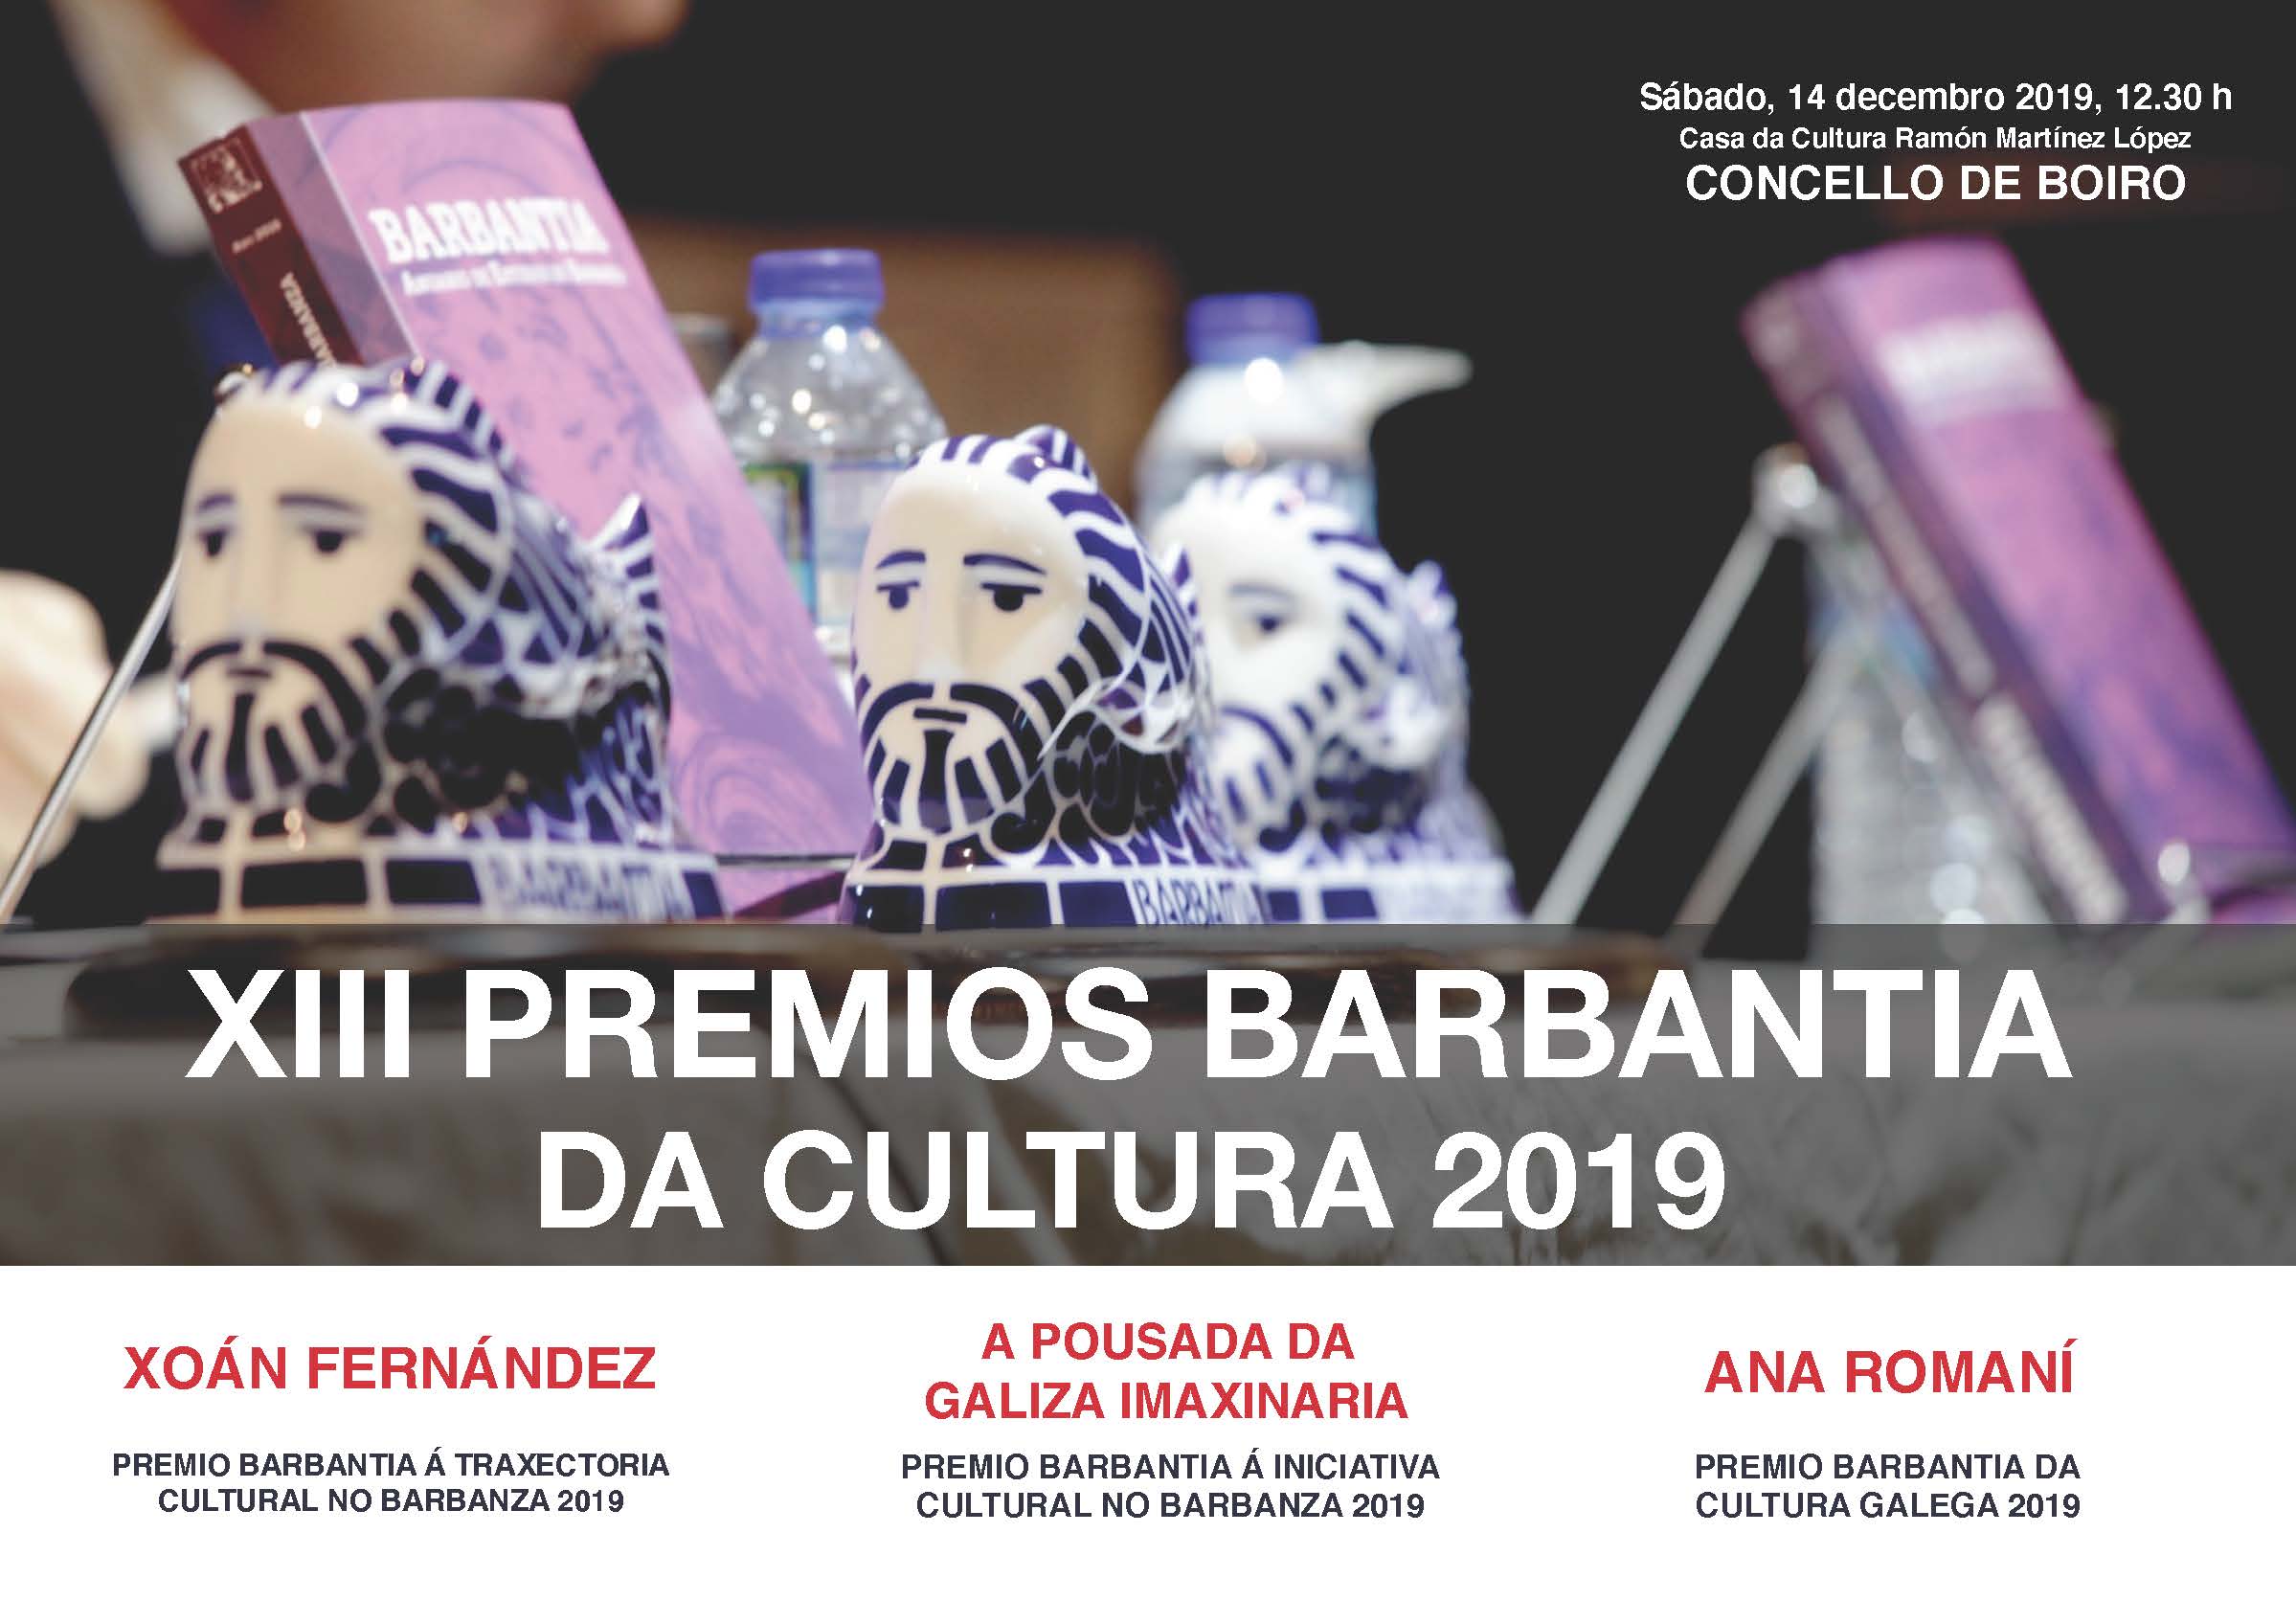 XIII Premios Barbantia da Cultura 2019